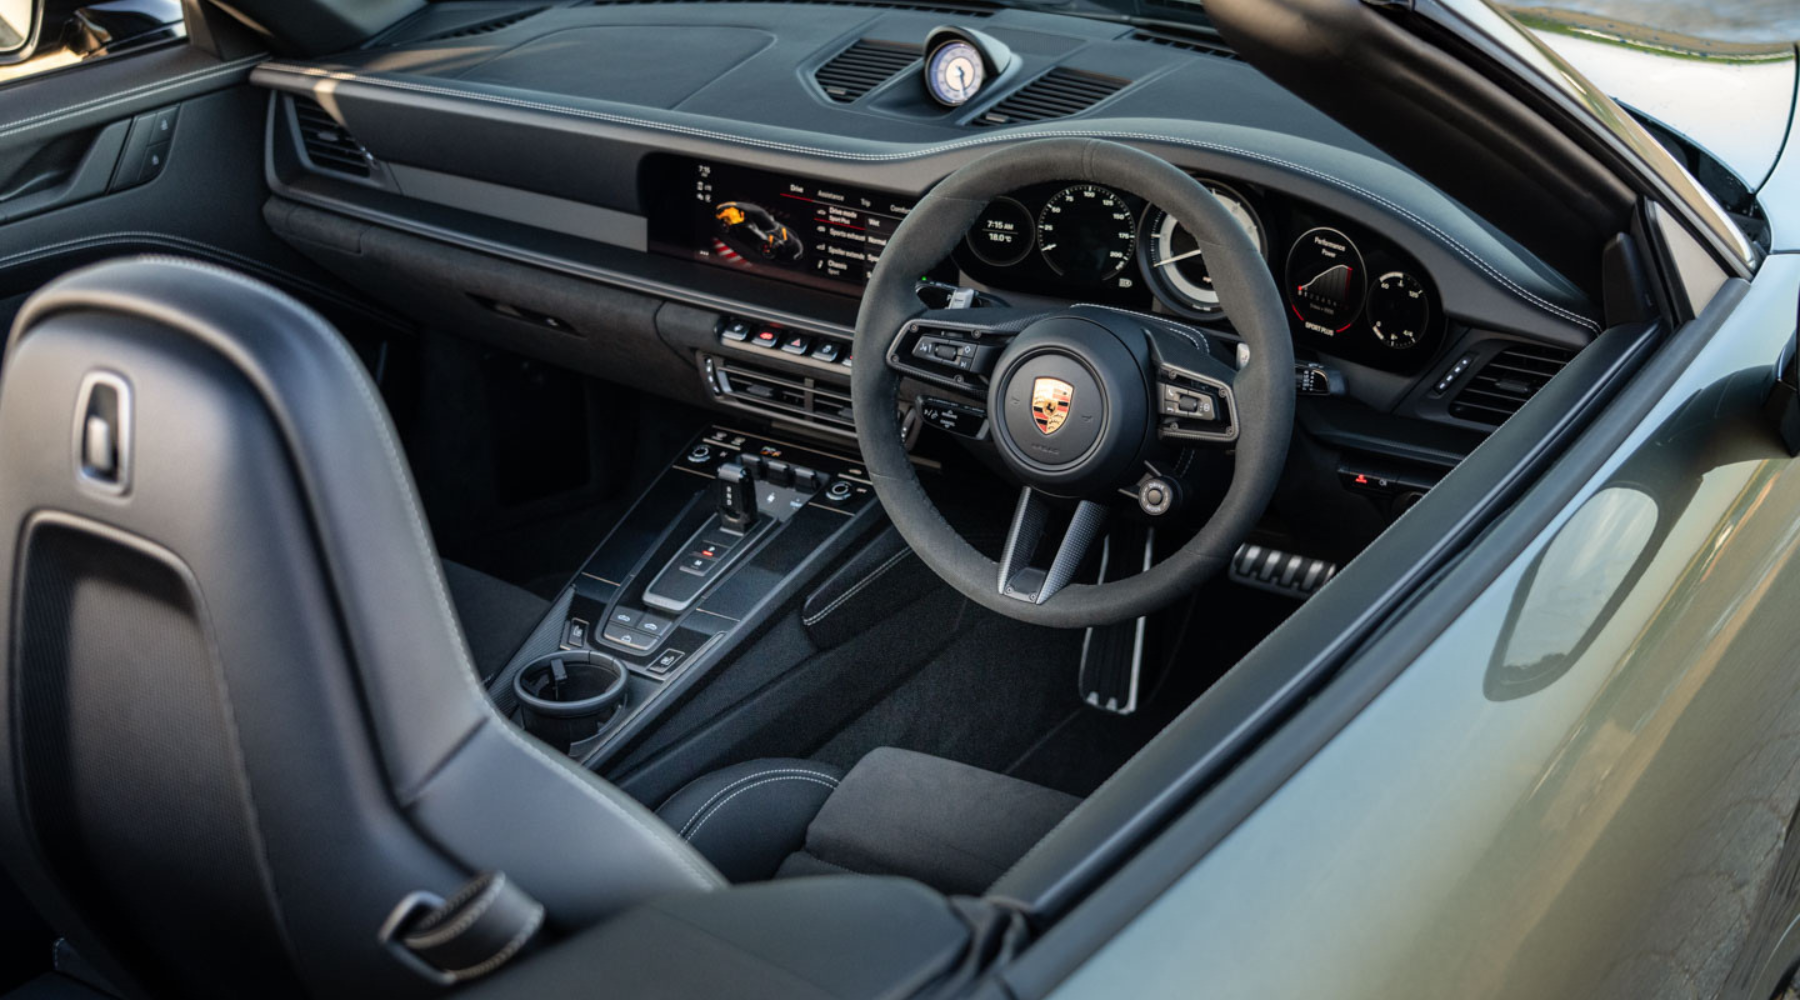 Omaze Million Pound House Draw Marbella Win a Porsche 911 GTS. Black leather interior of the Porsche with steering wheel